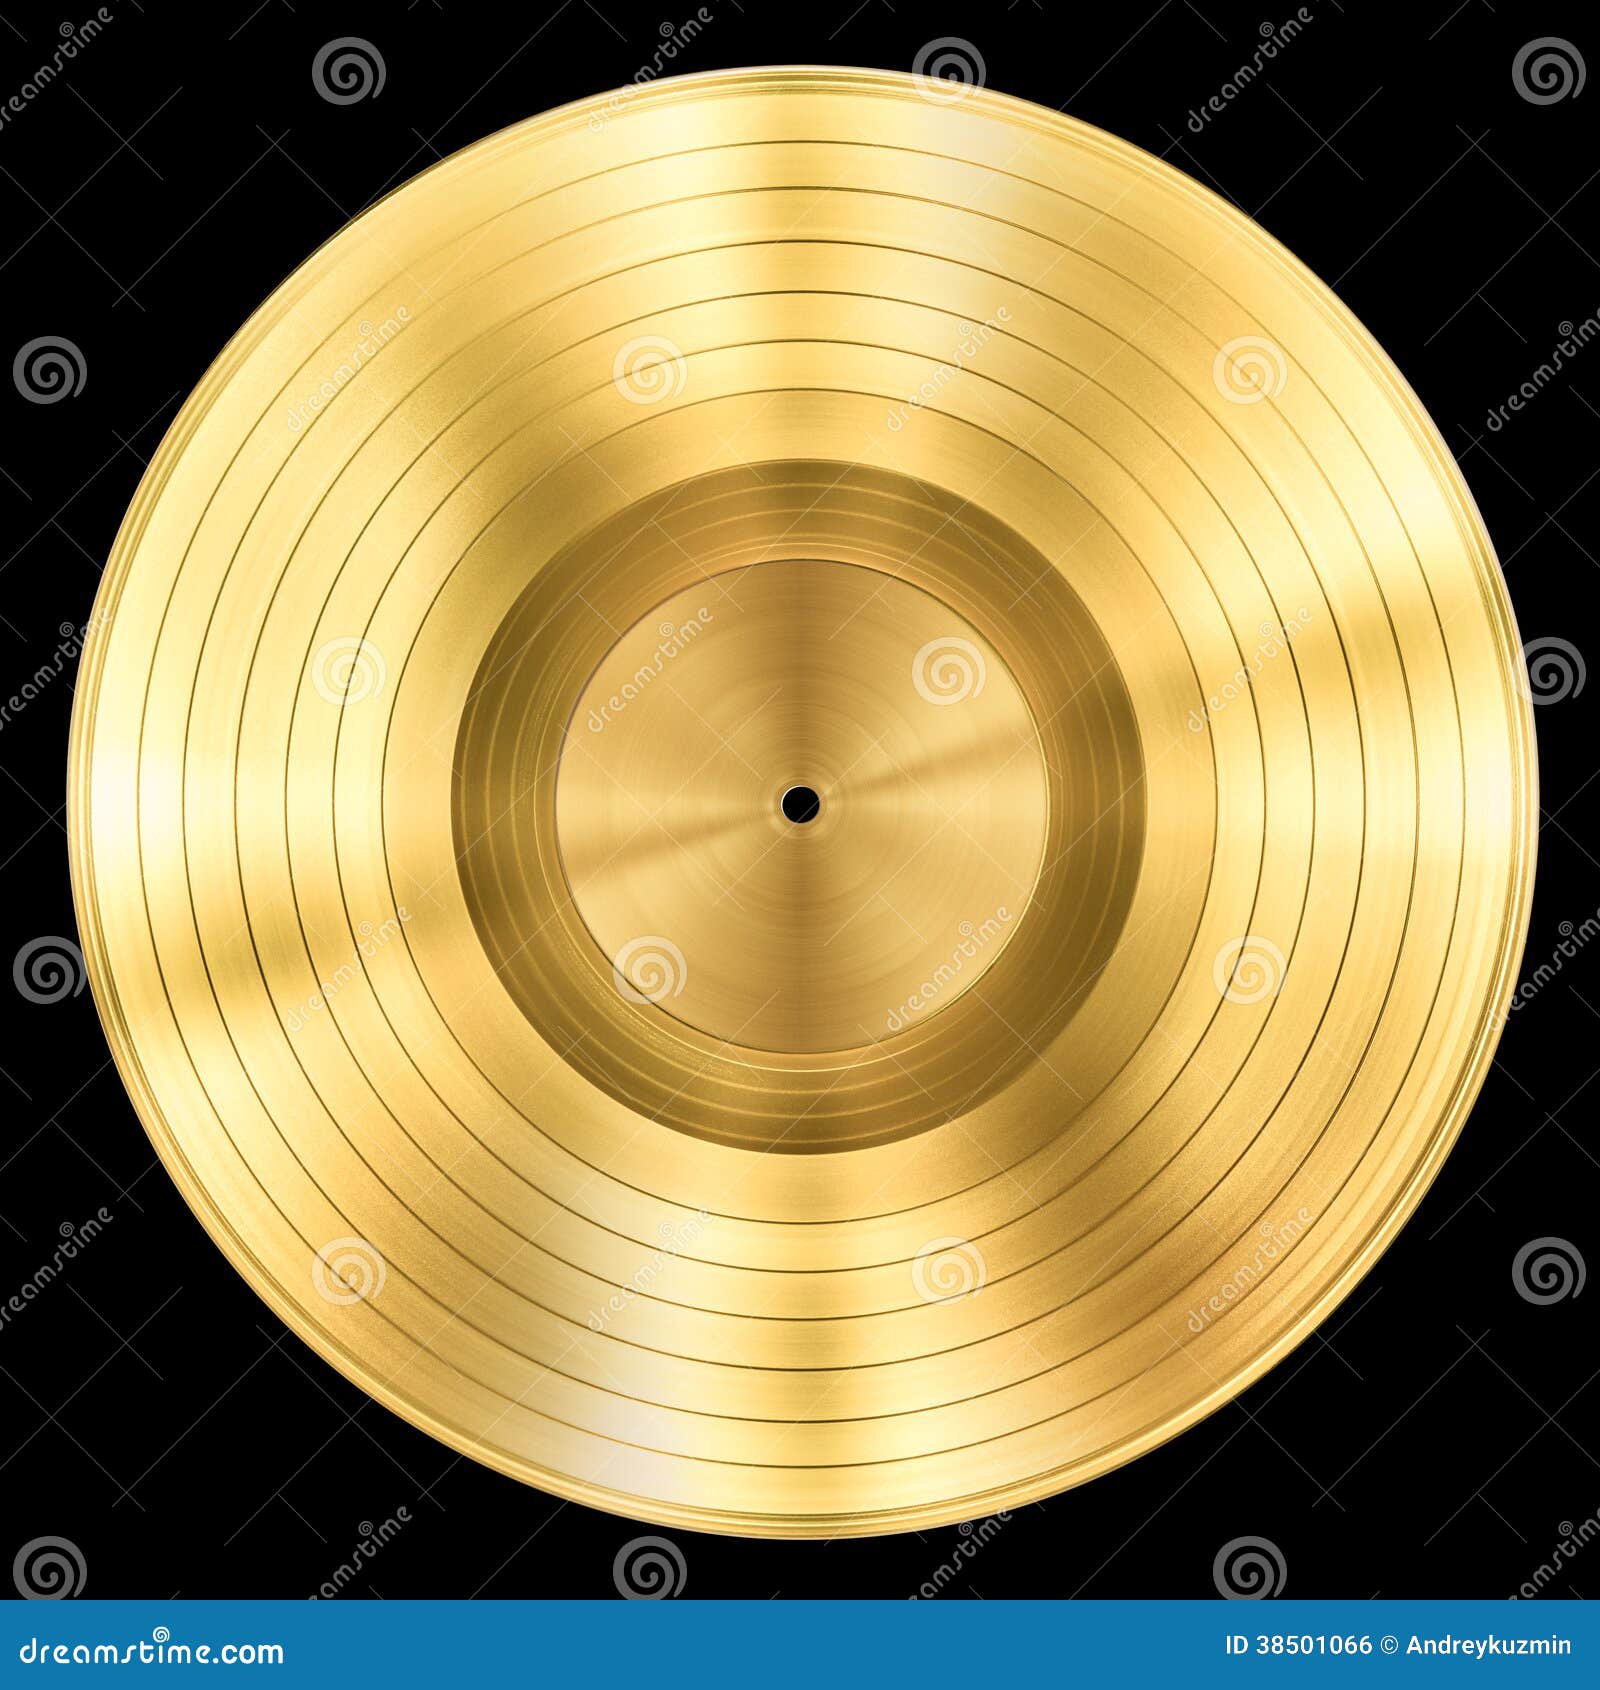 gold record music disc award 